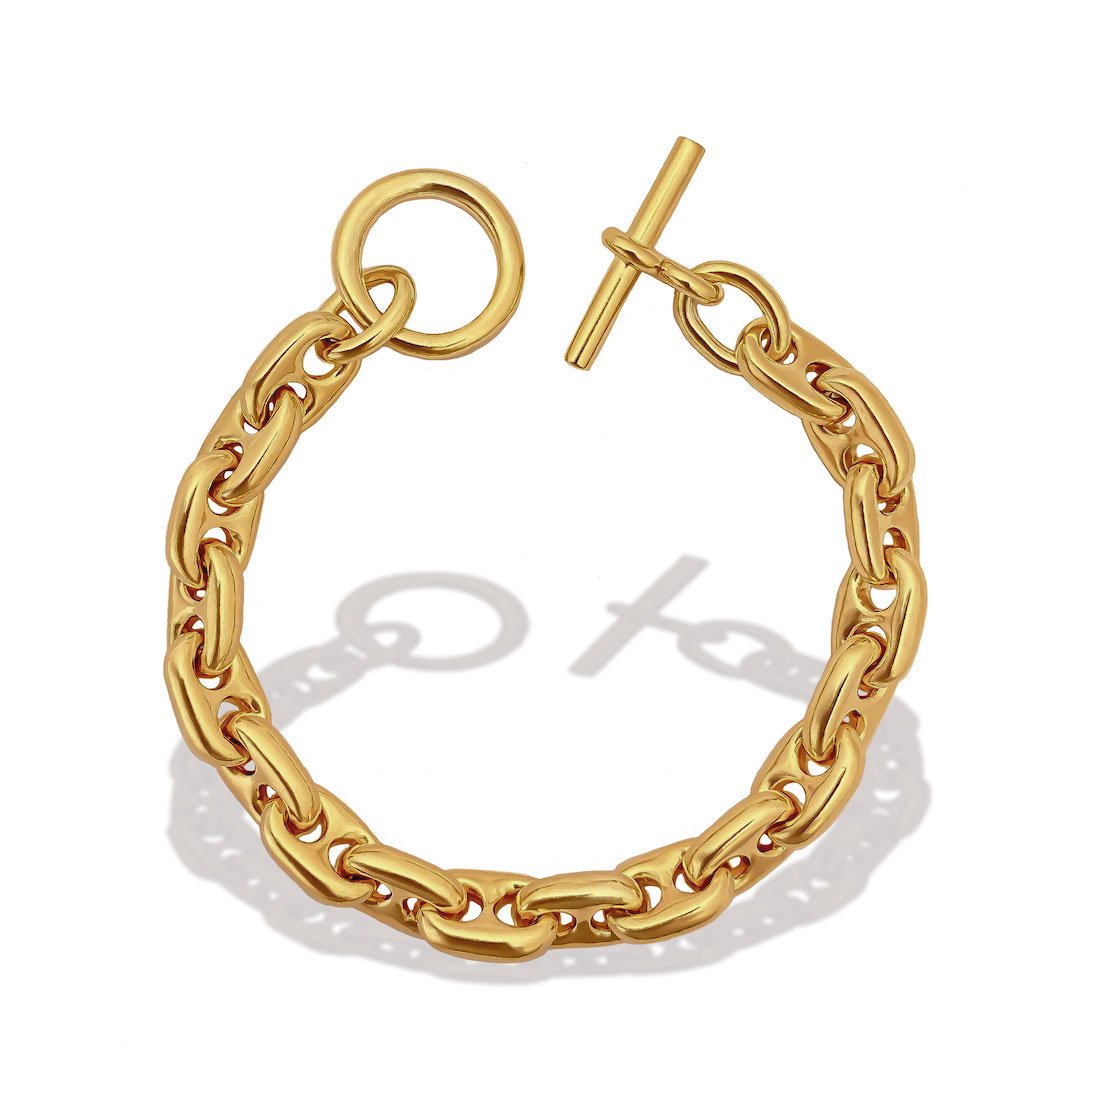 Anchor bracelet for men, men's bracelet, bronze anchor charm, black cord,  gift for him, nautical bracelet, nautical jewelry, surfer bracelet – Shani  & Adi Jewelry